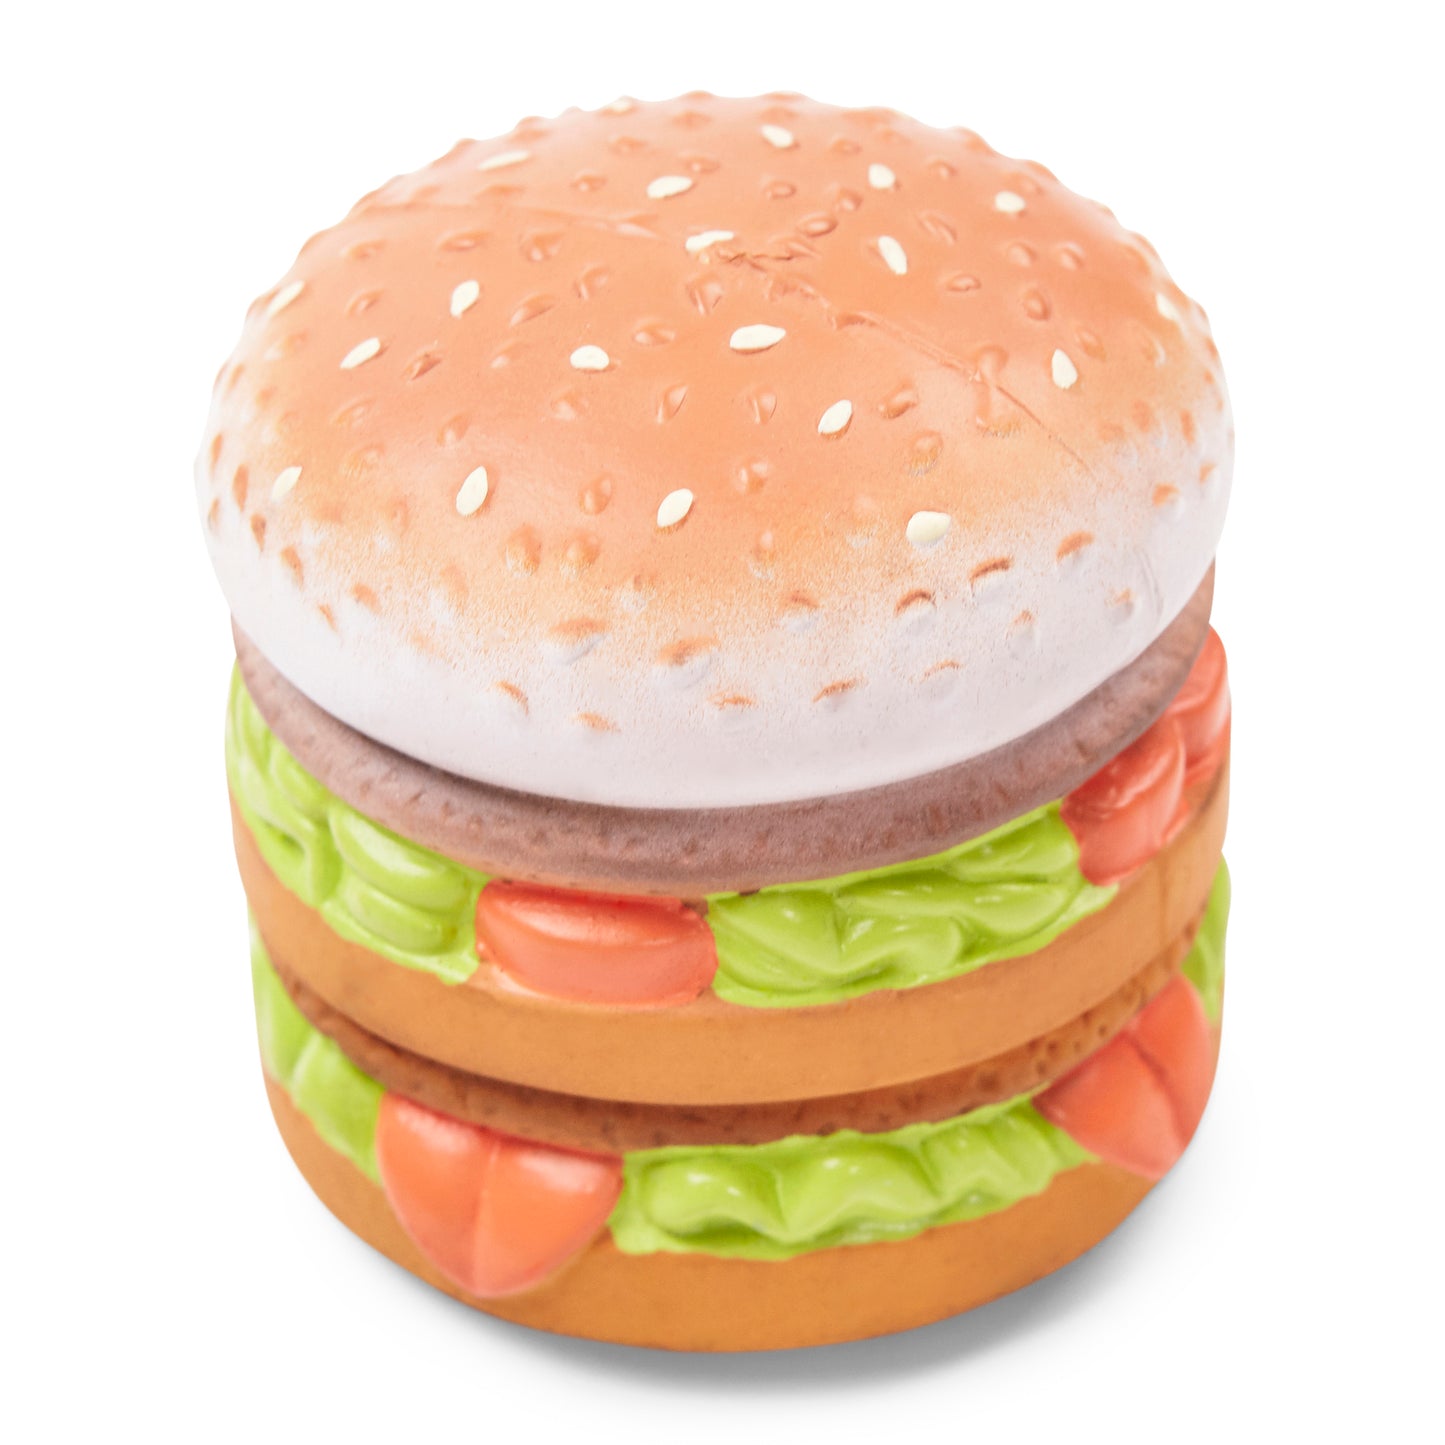 Hamburger latex squeaky toy